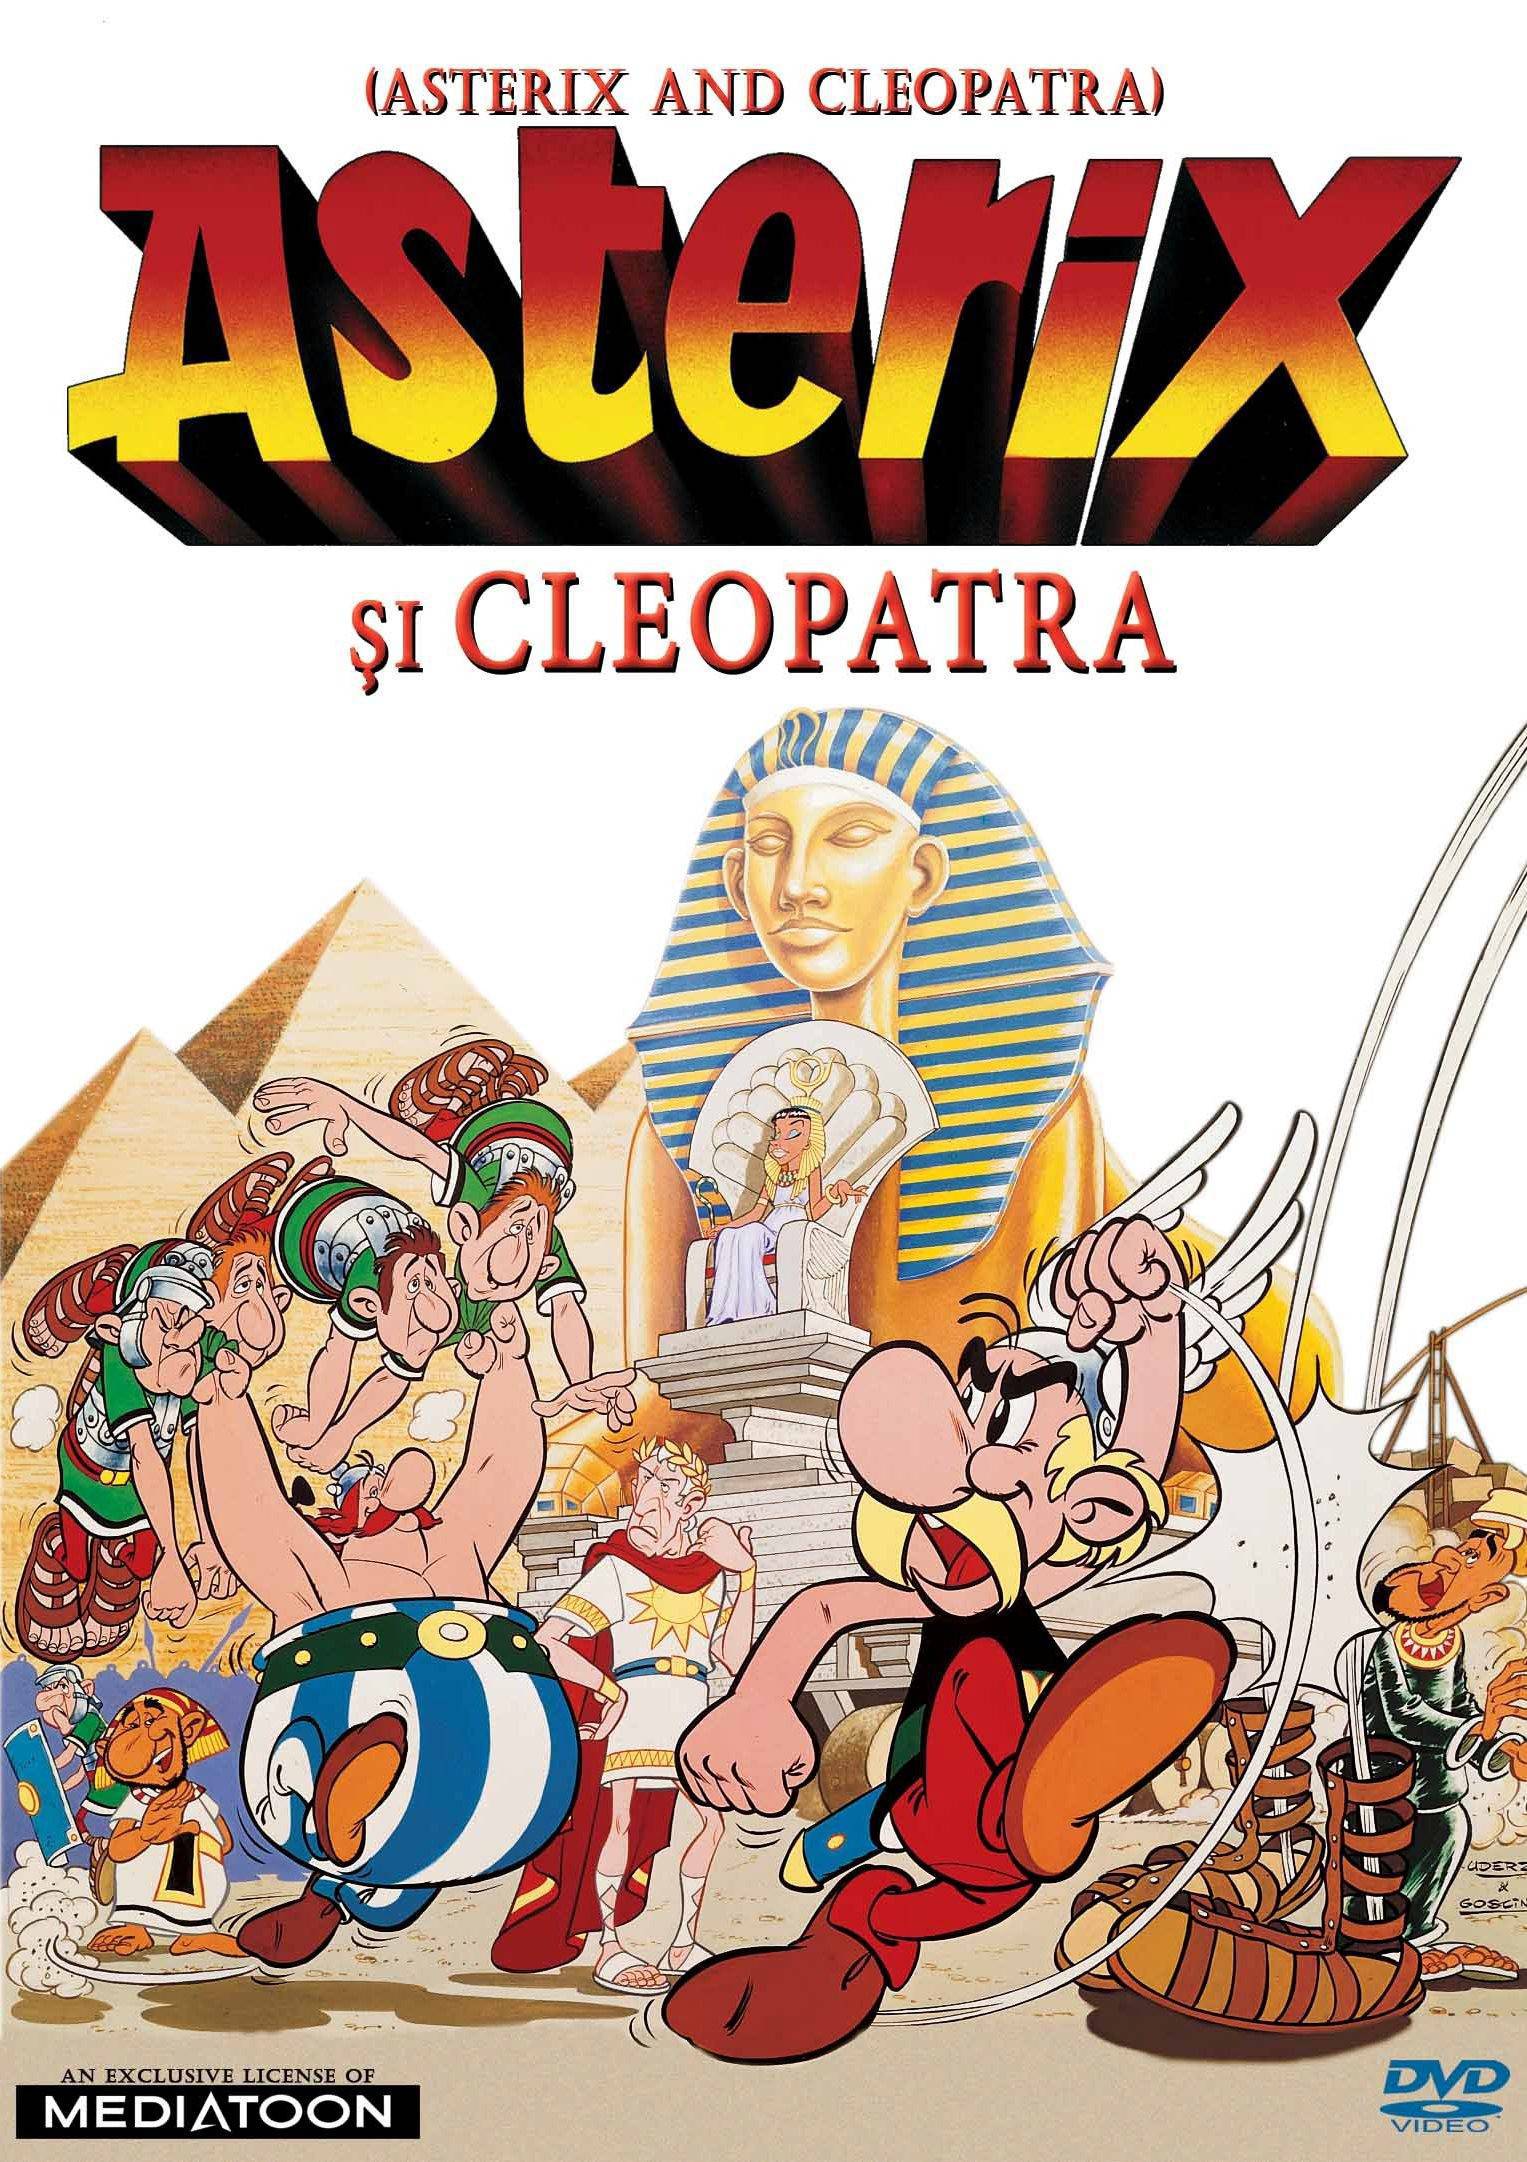 DVD Asterix si Obelix si Cleopatara - Dublat in limba romana